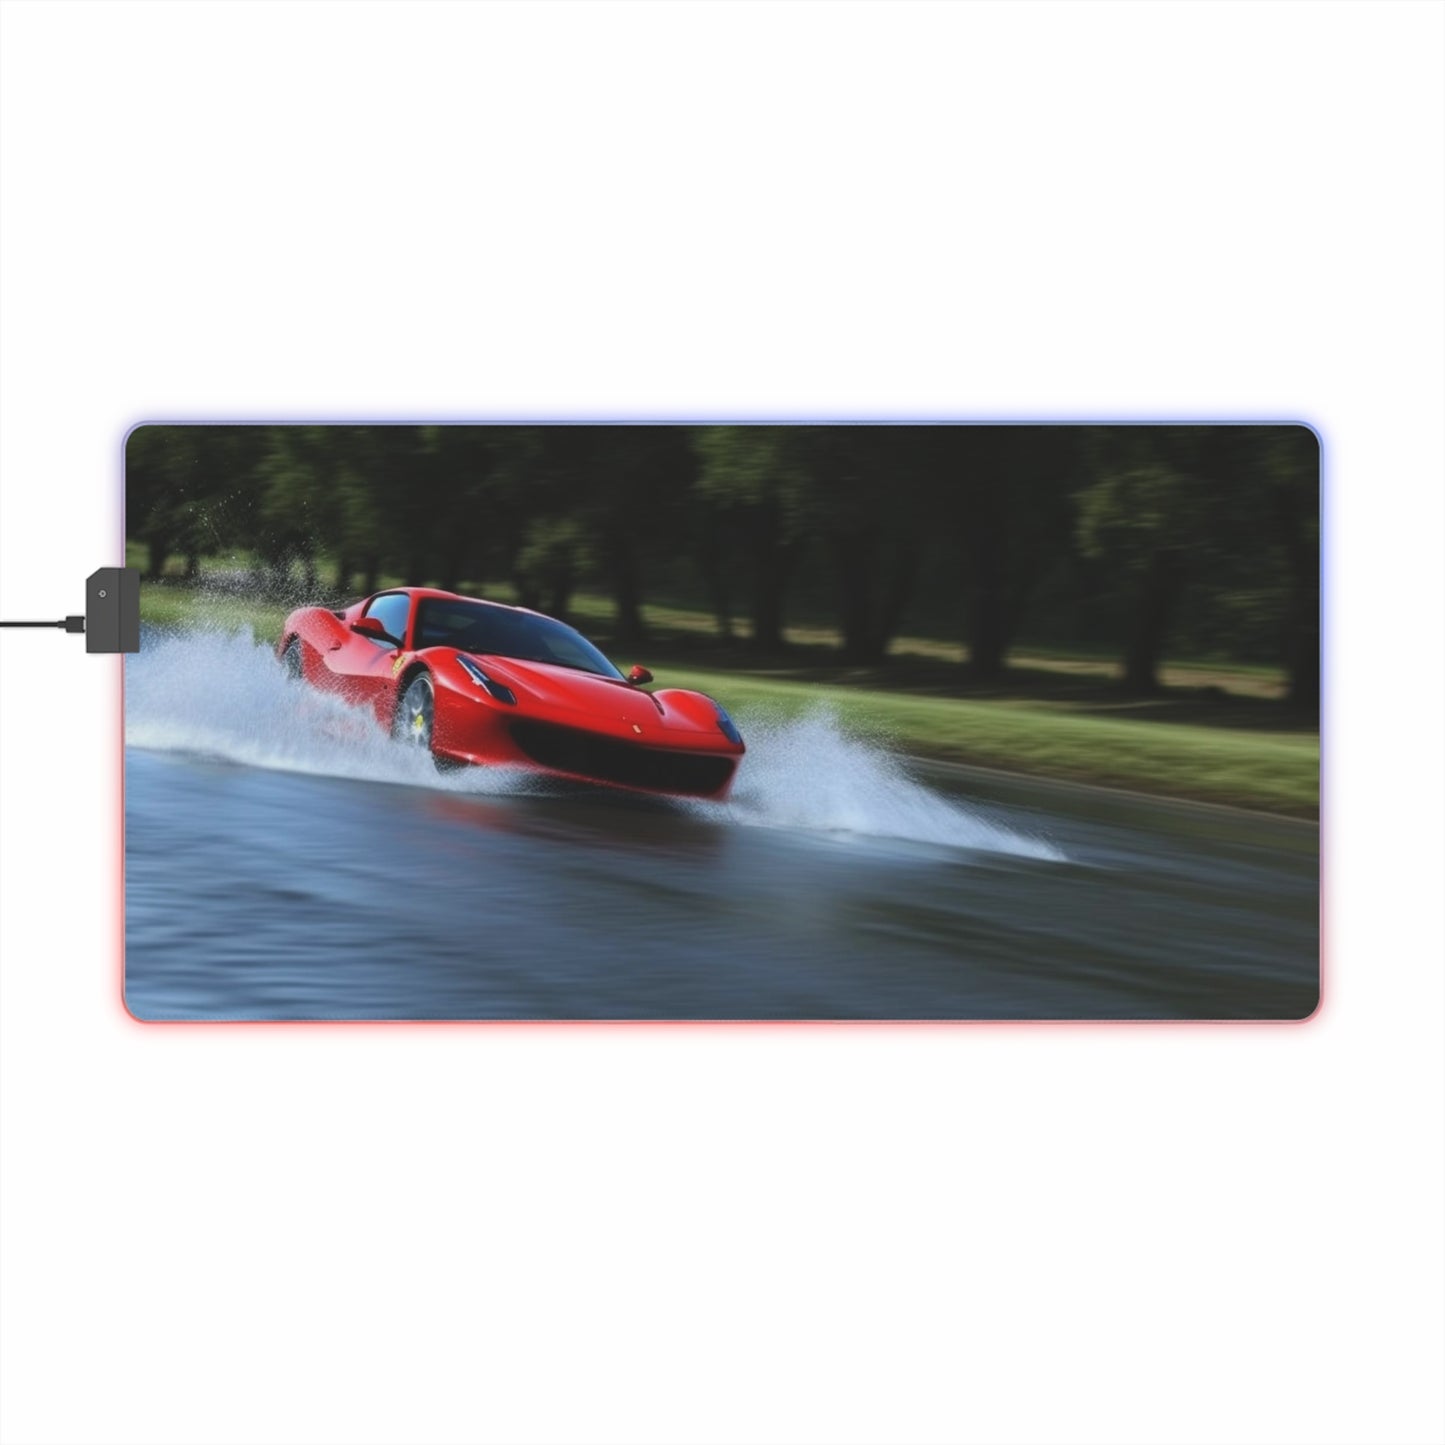 LED Gaming Mouse Pad Water Ferrari Splash 3